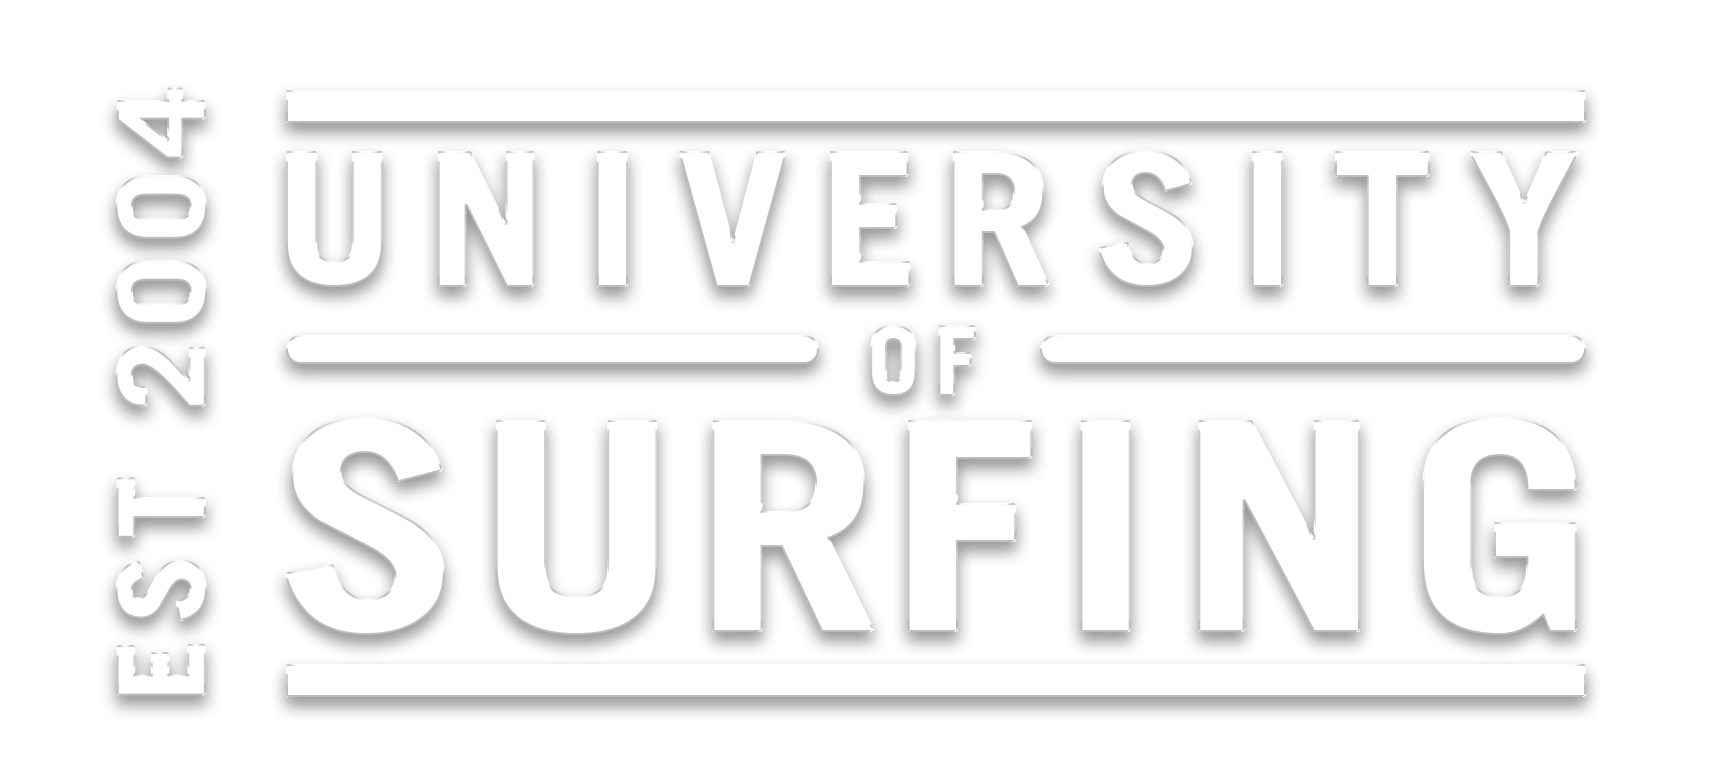 University of Surfing